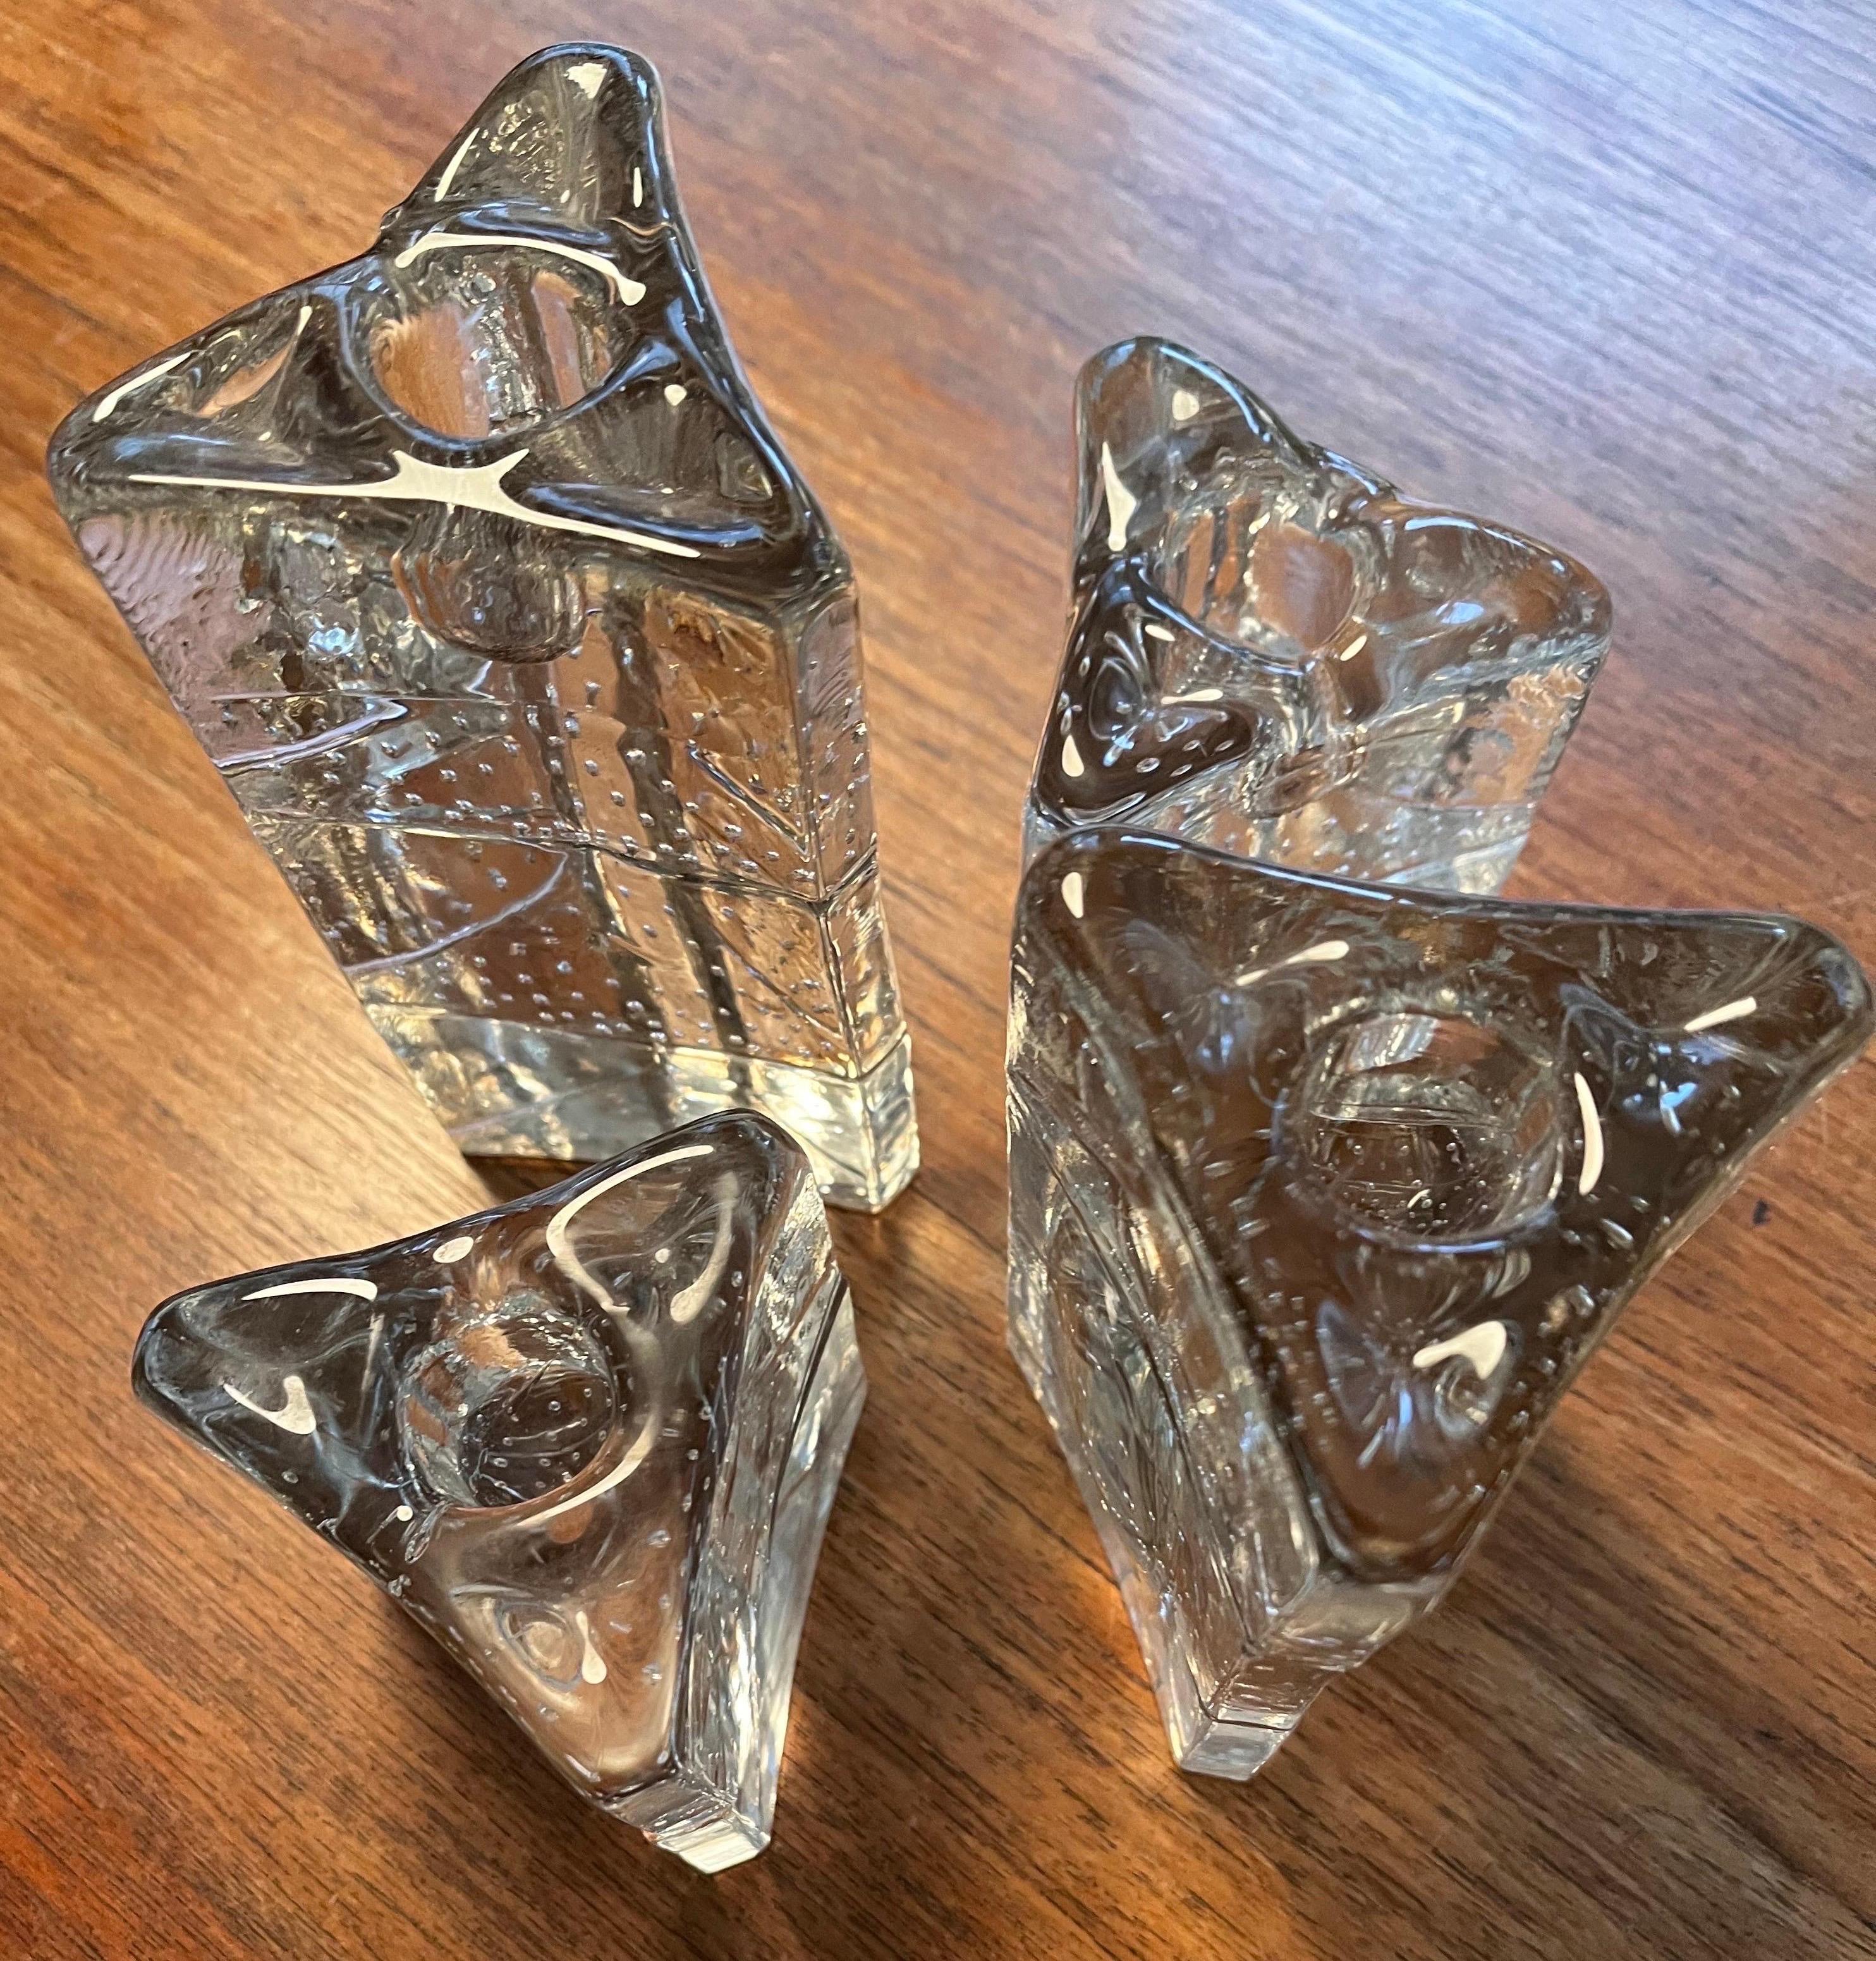 Arkipelago glass icicle candle holders 
Timo Sarpaneva - Finland

Set of Four
( 1 ) - 3